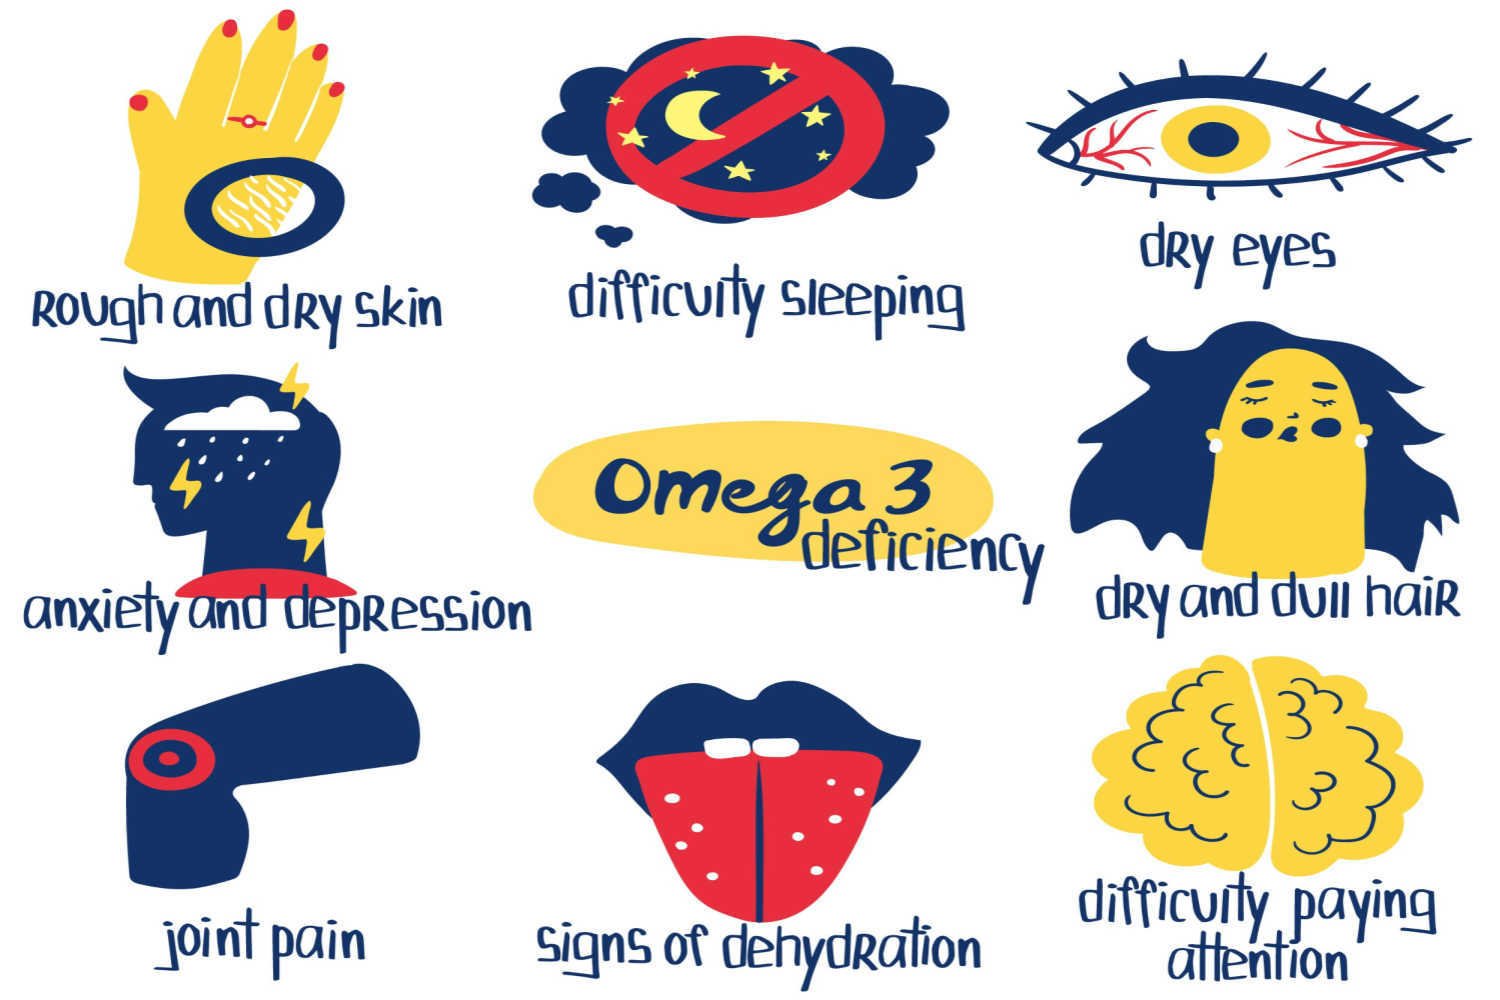 Omega 3 Fatty Acid Deficiency in Babies